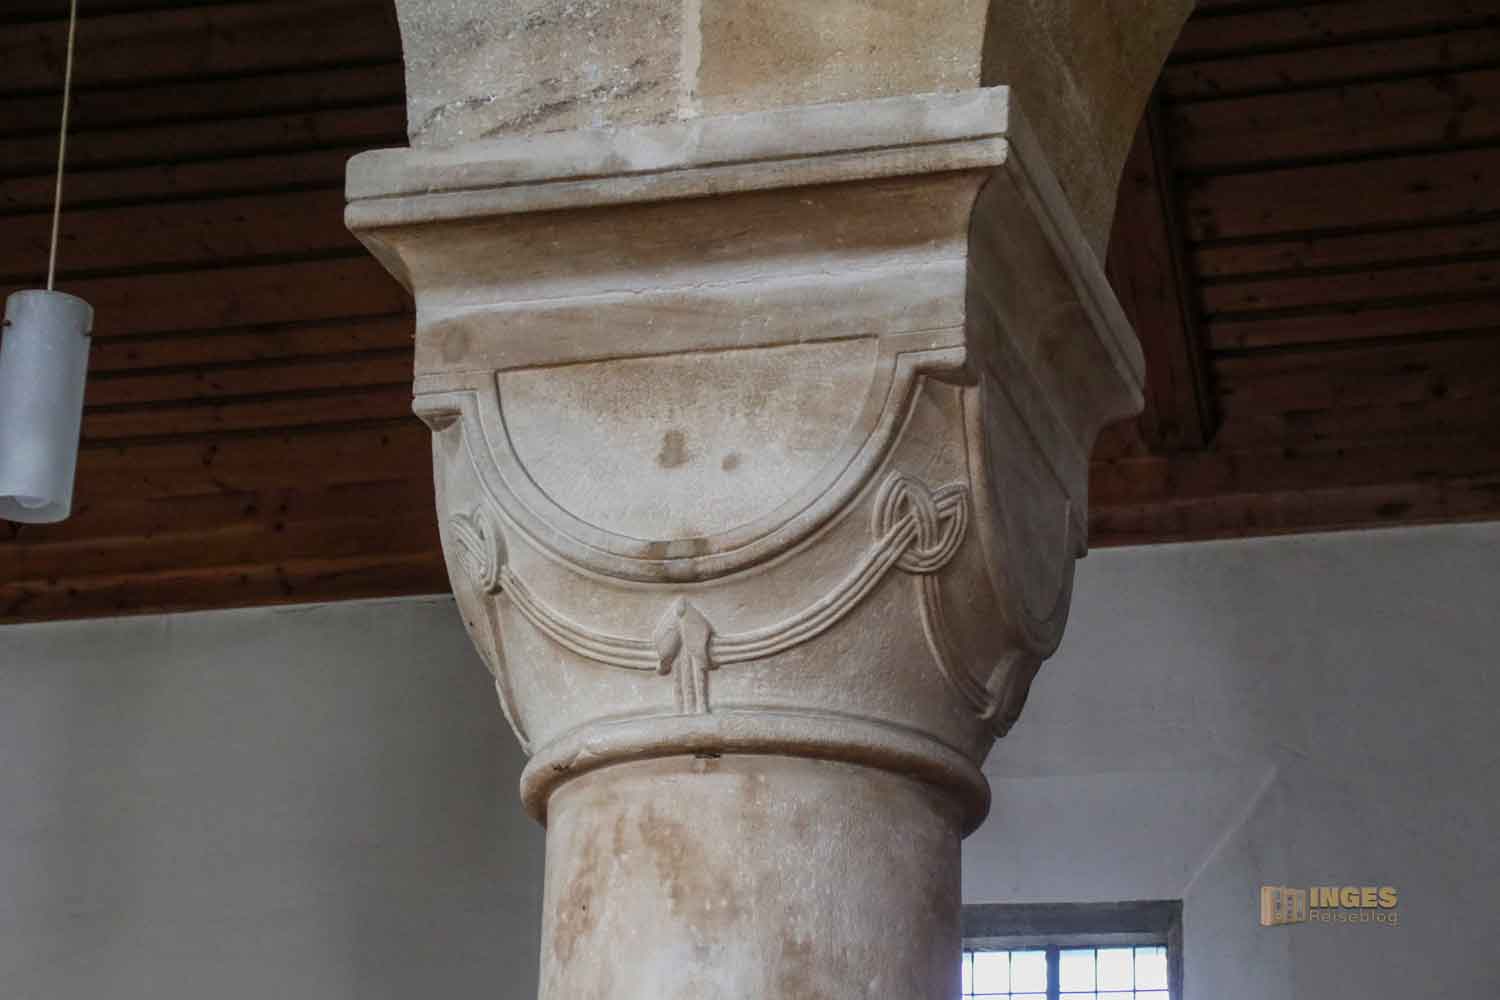 Säulen in der Stiftskirche Faurndau 0633